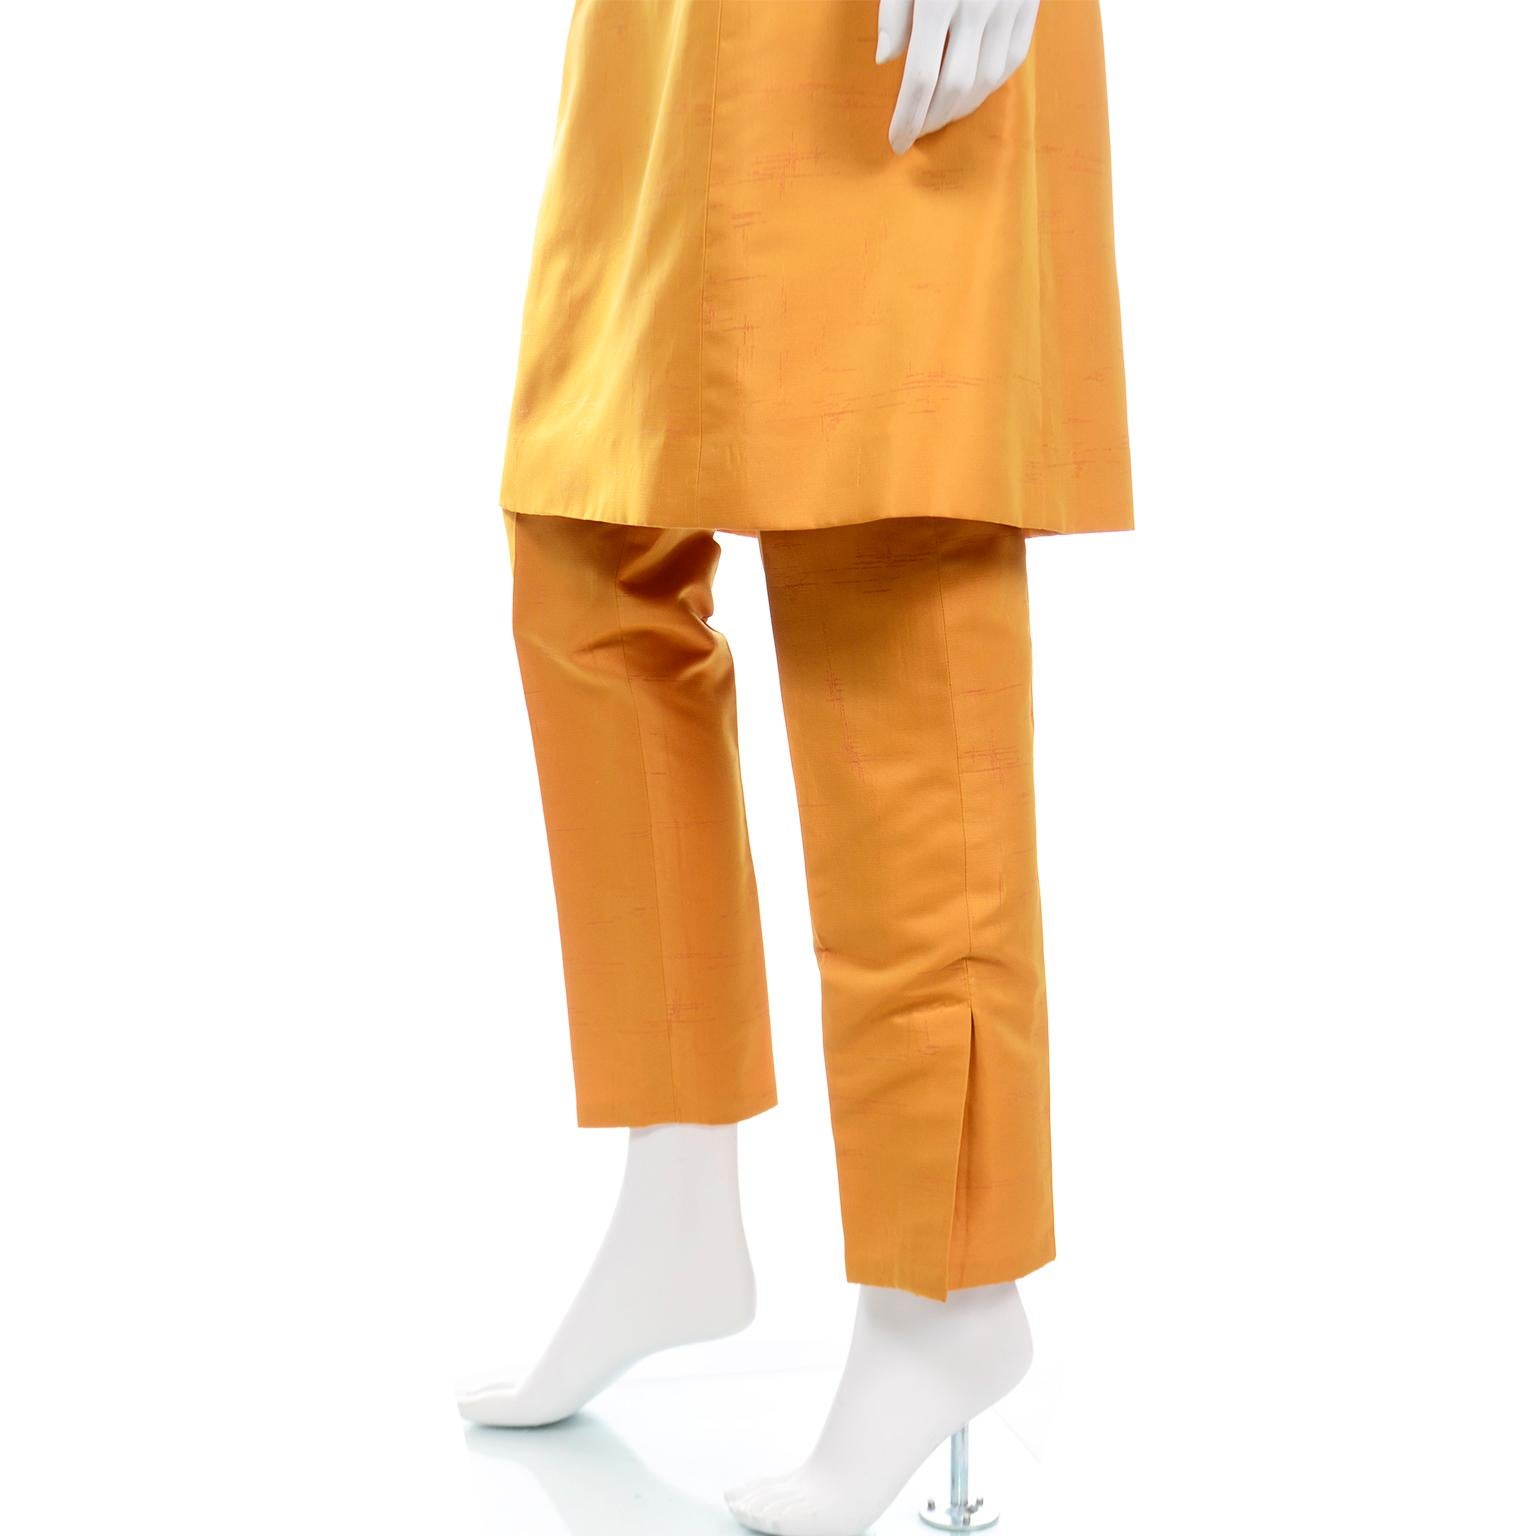 Oscar de la Renta 1990s Vintage 1960s inspired Coat Pants and Dress Outfit For Sale 11